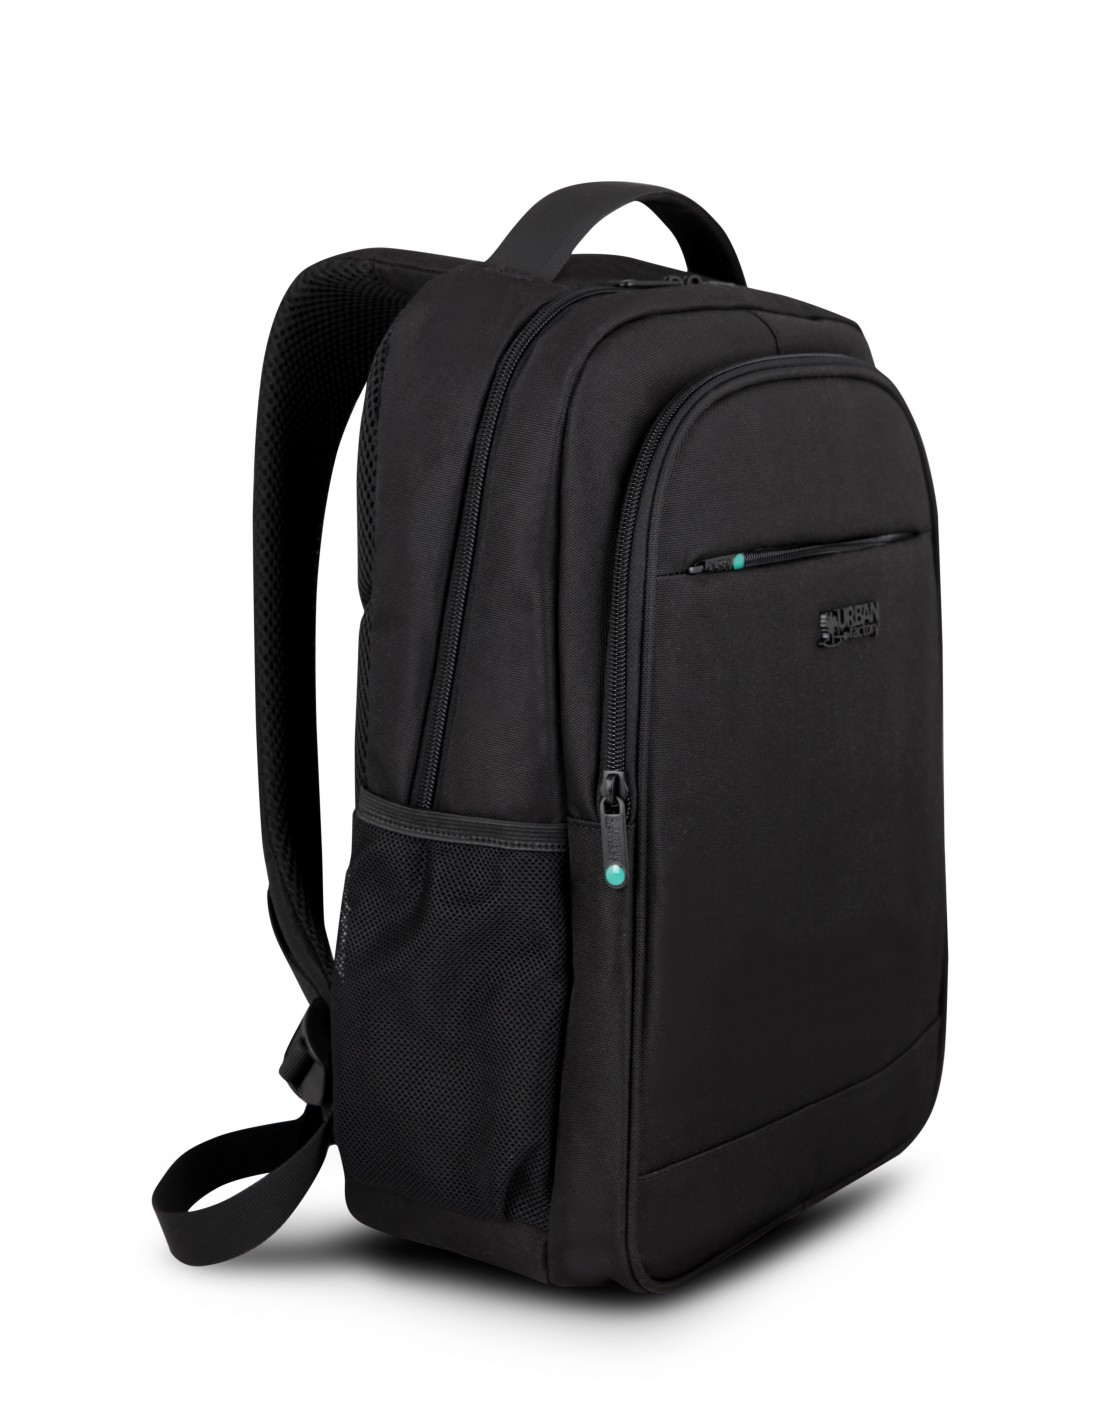 Laptop backpack. Dedicated laptop compar